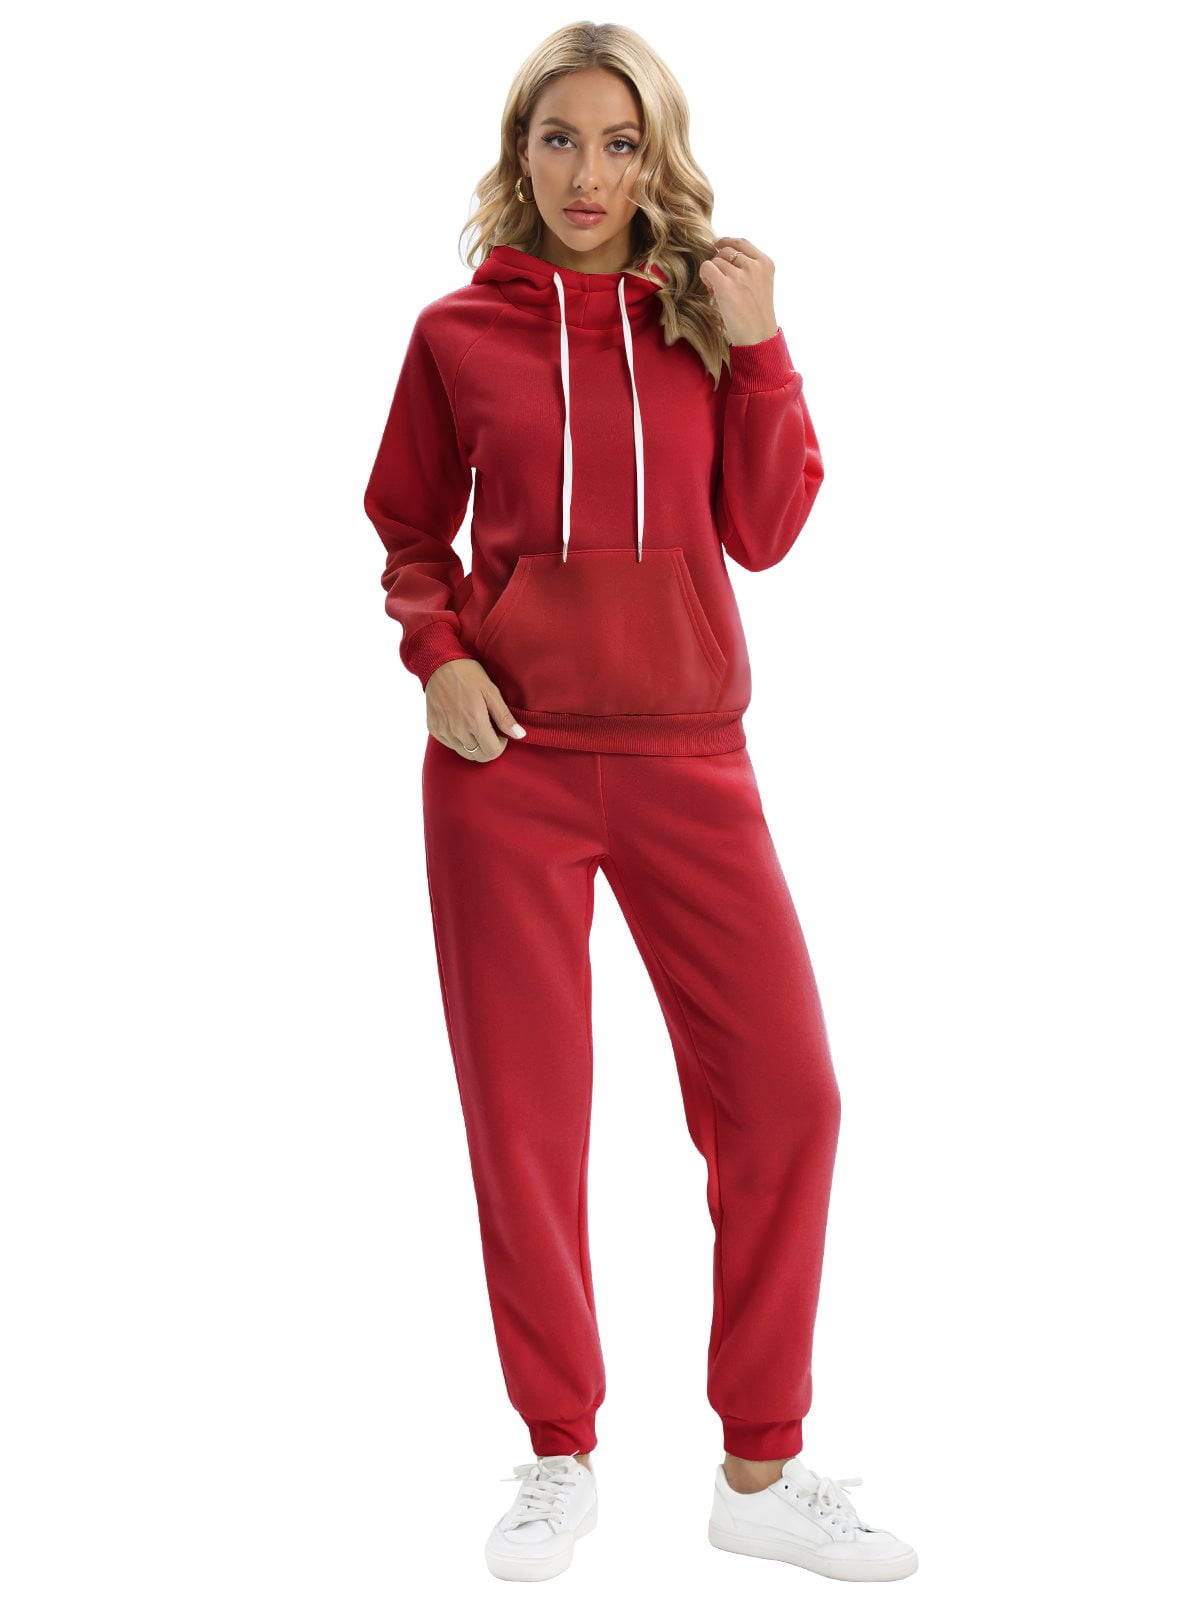 EFINNY (2022 Upgrade) 2Pcs Women Girls Hoodies Sweatshirt + Pants Sets  Casual Tracksuit Jogging Gym Sport Wear Suit 